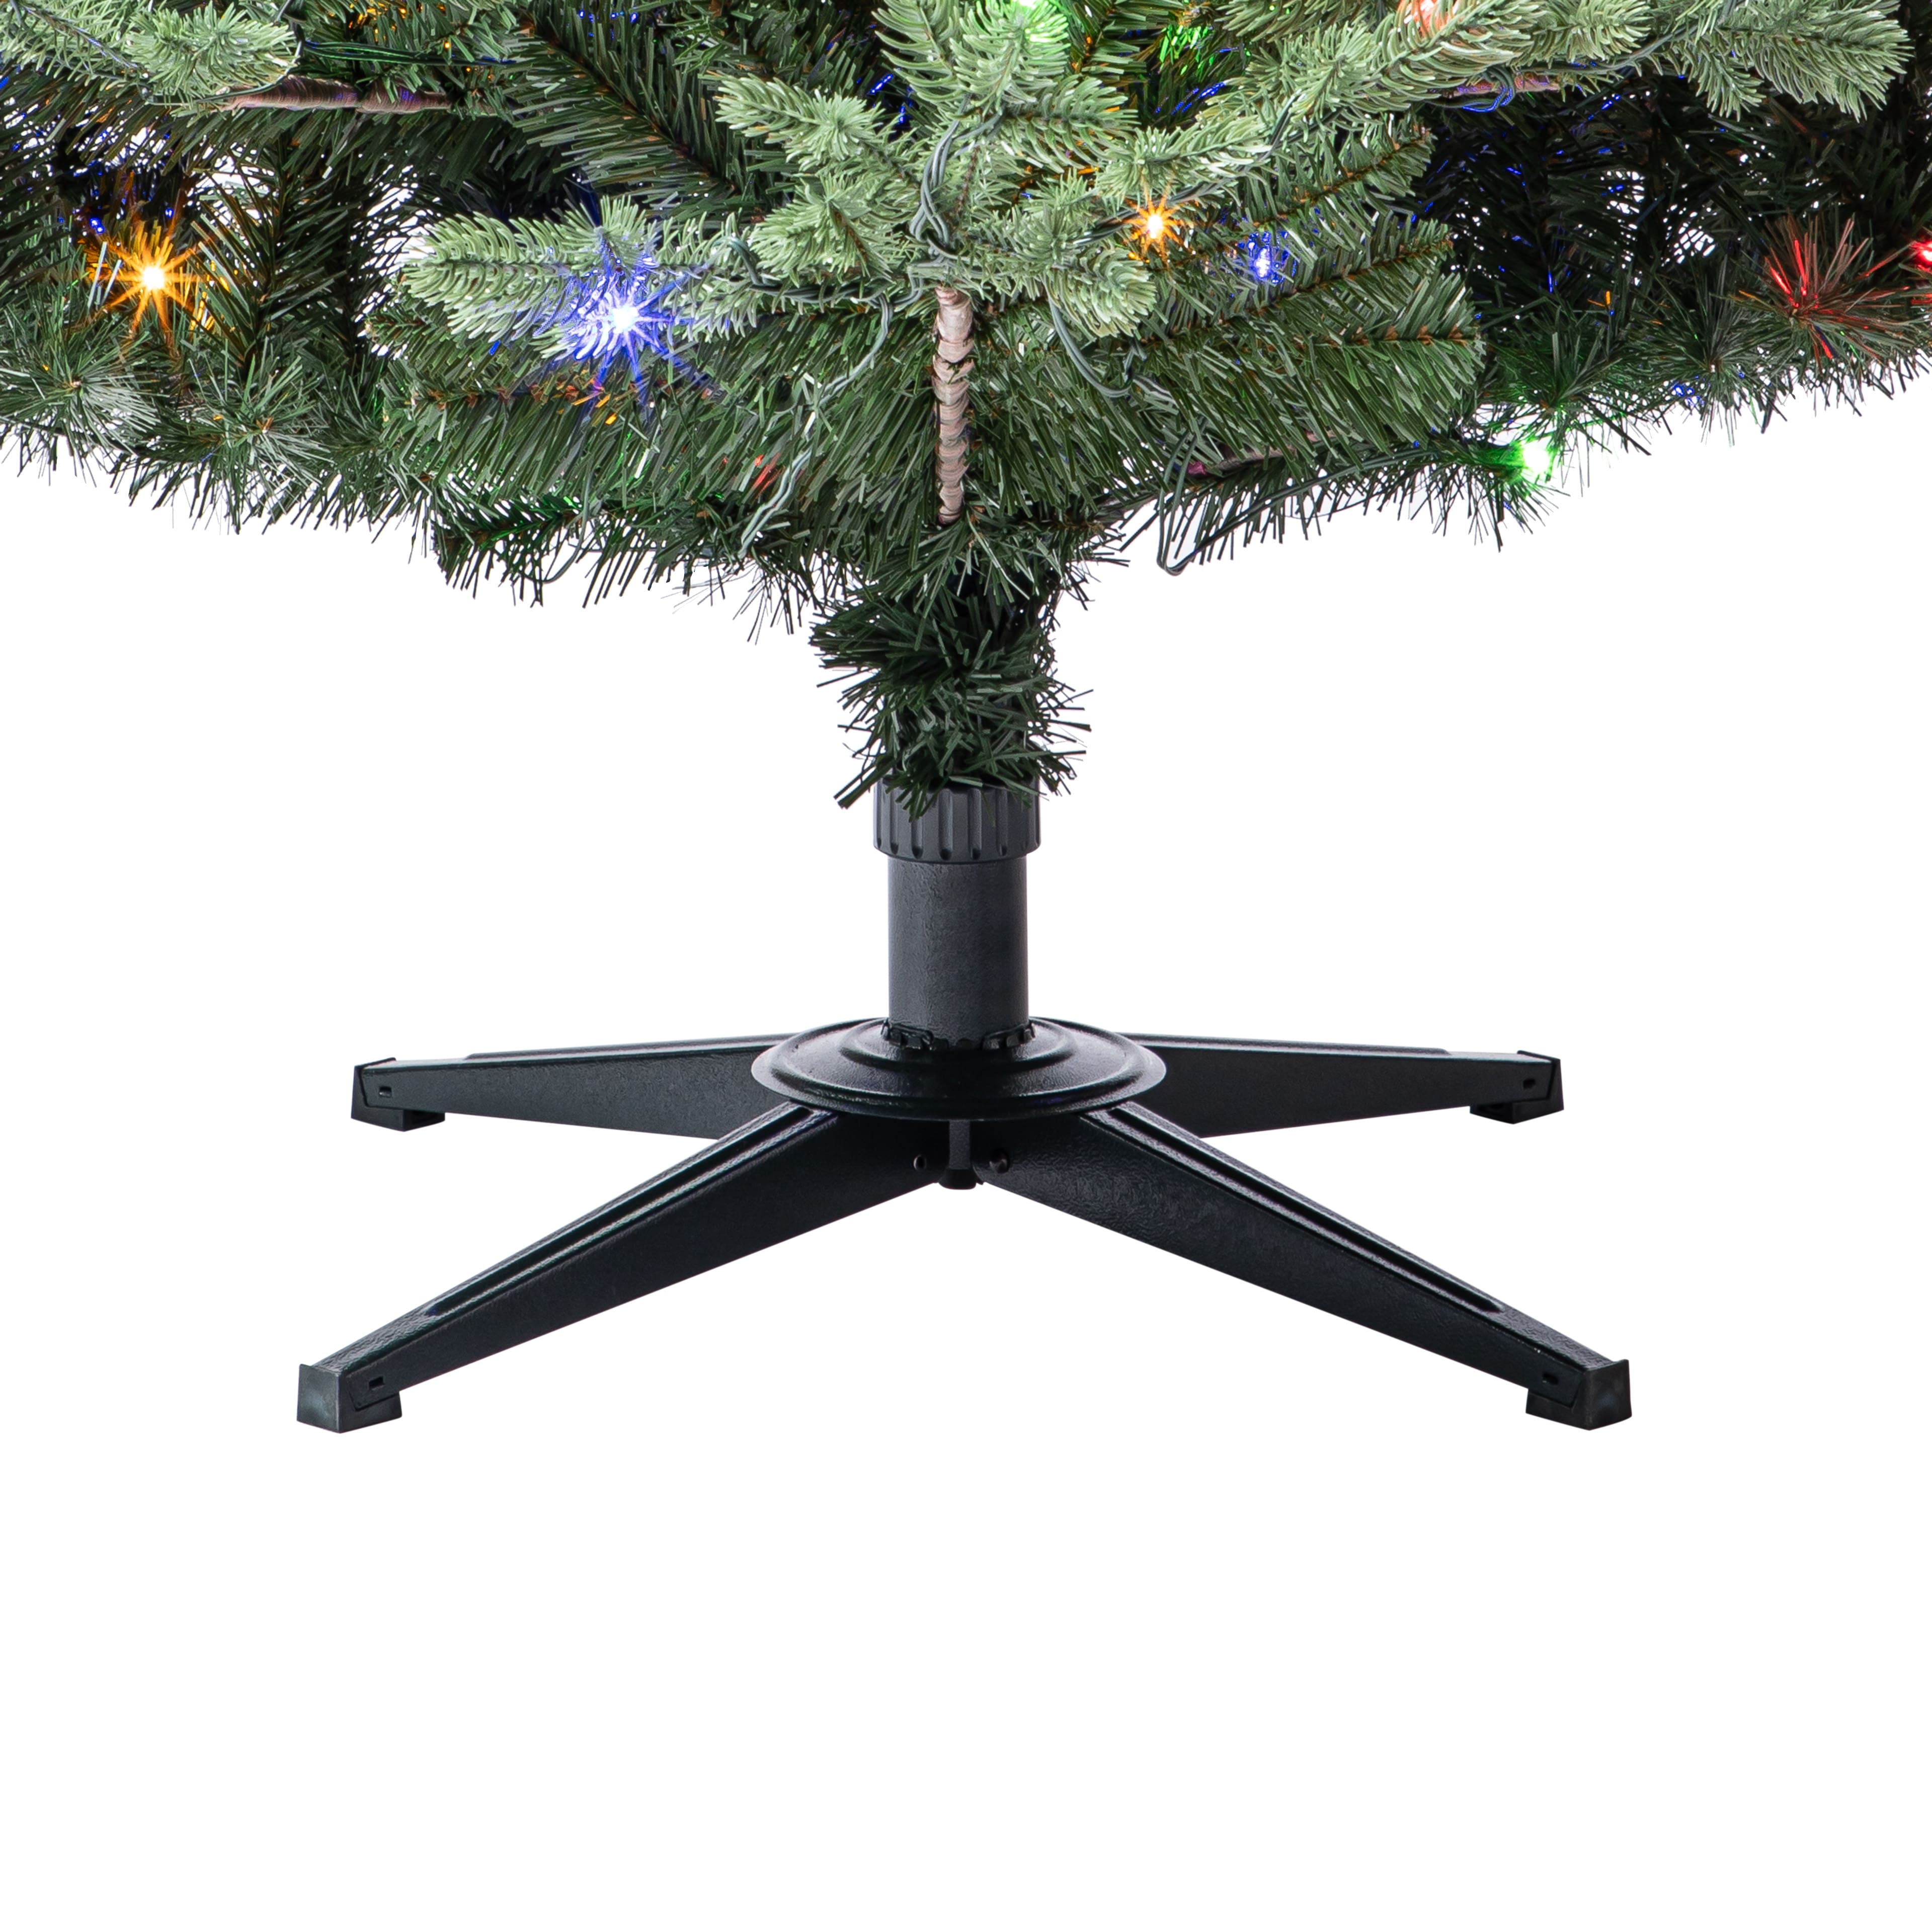 Ashland 10671960 7.5ft. Pre-Lit Balkan Spruce Quick Set® Artificial Christmas Tree, Color-Changing LED Lights